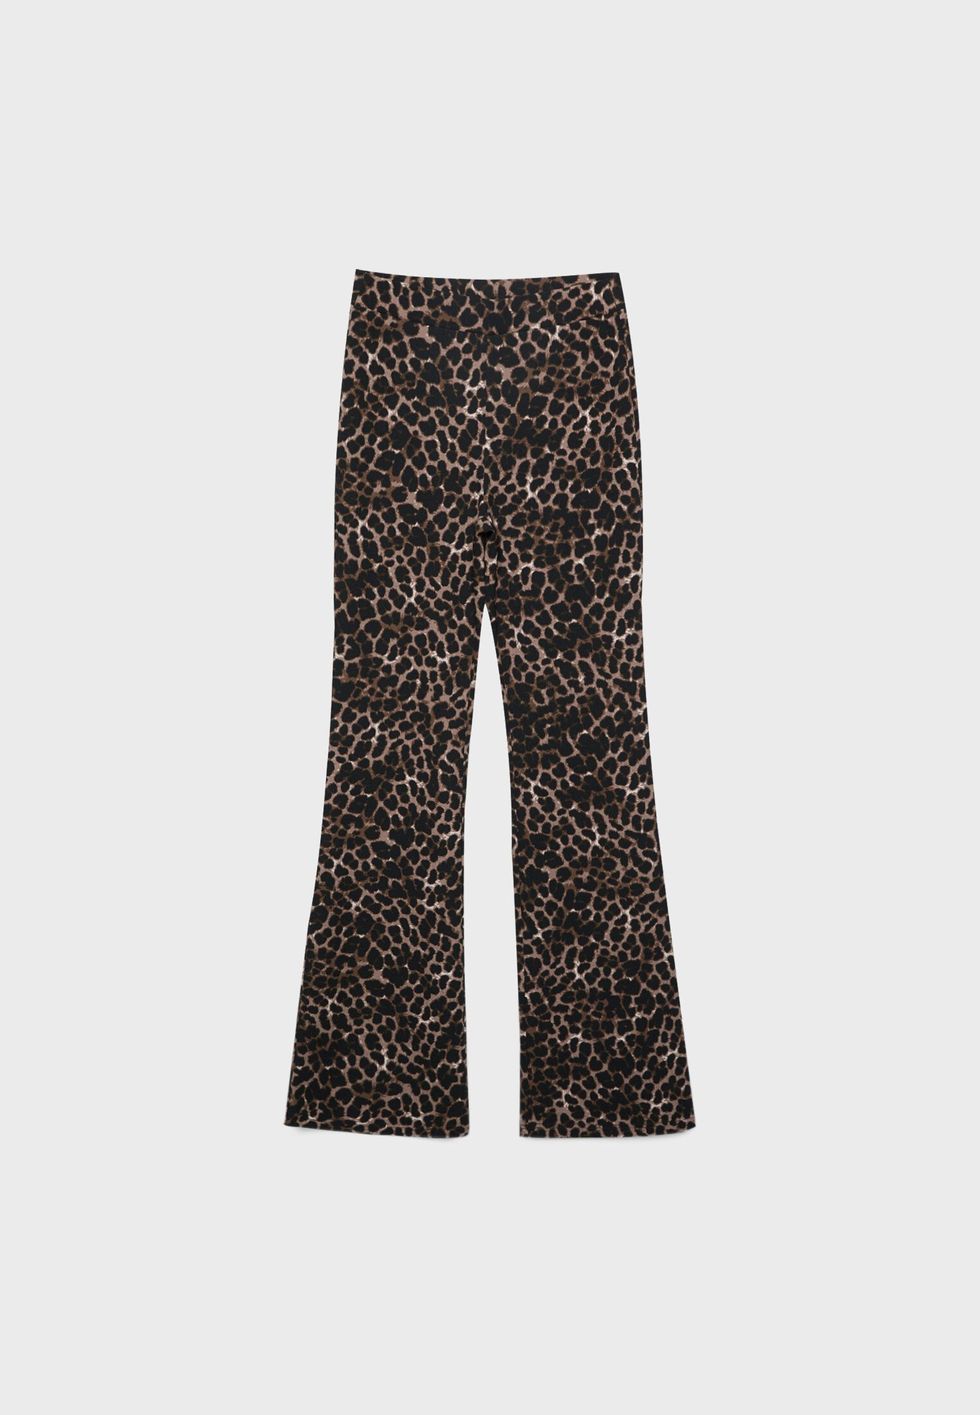 Pantalón leopardo flare